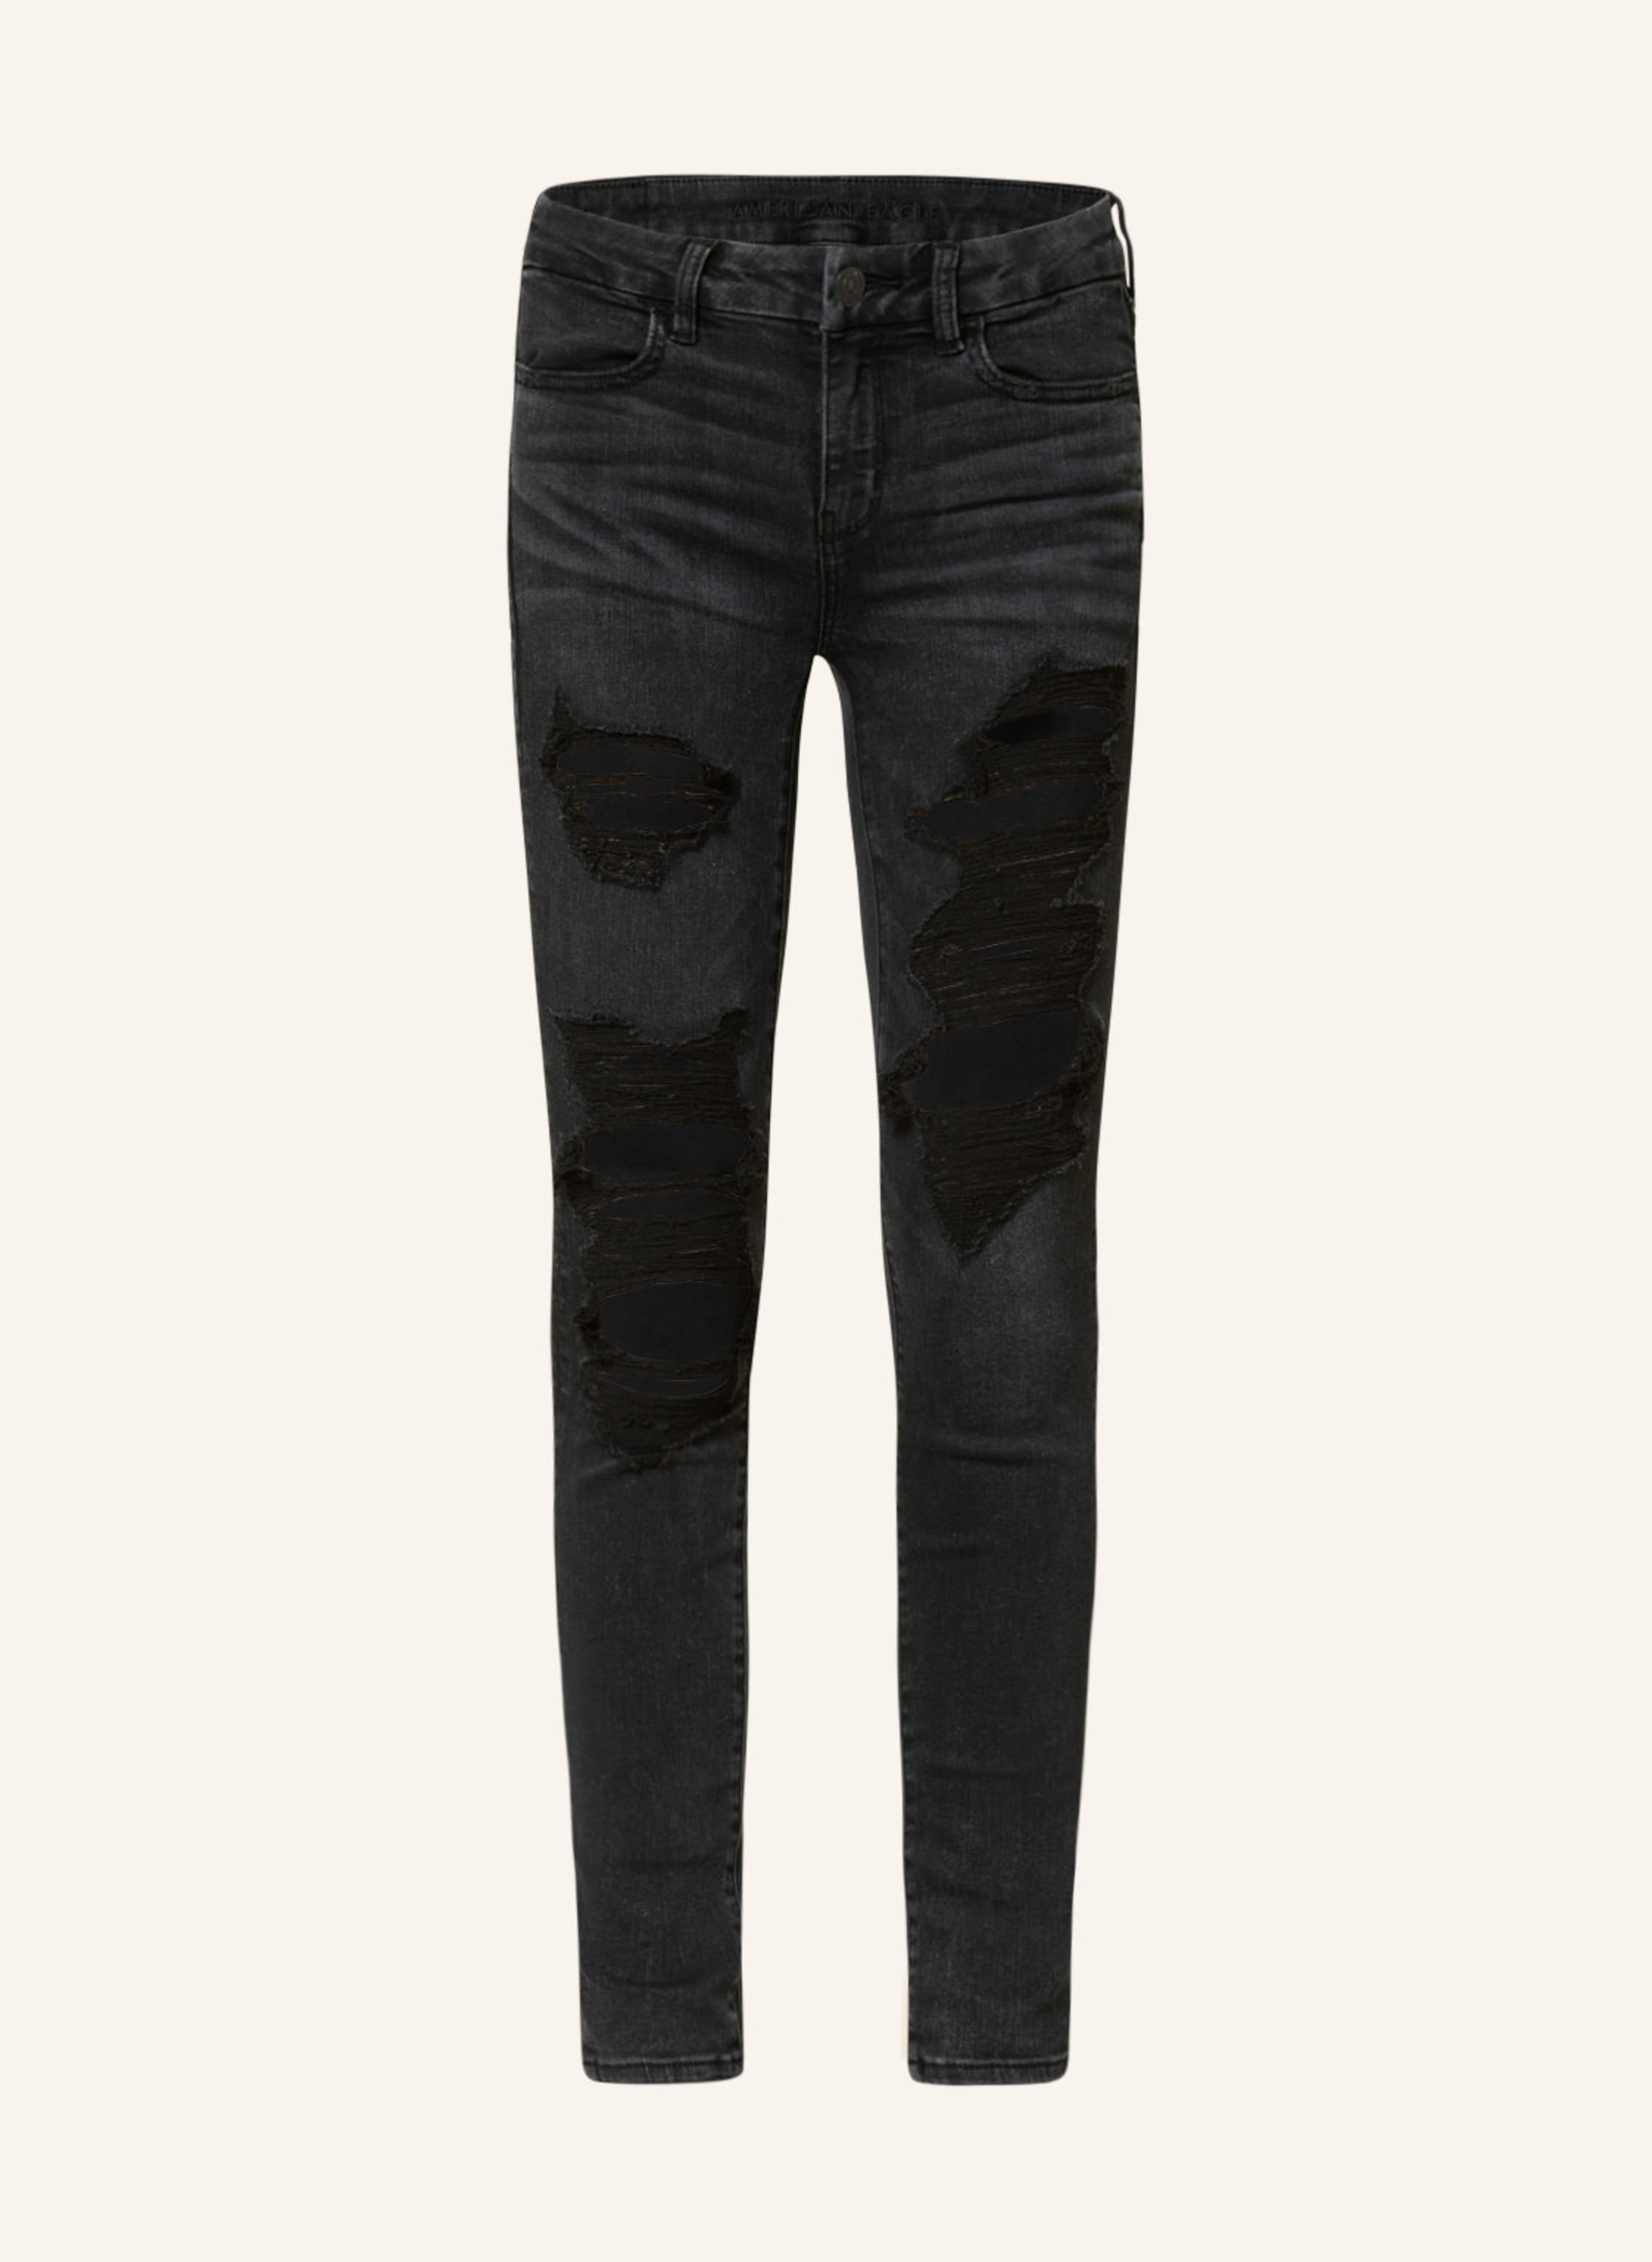 AMERICAN EAGLE Destroyed jeans in black